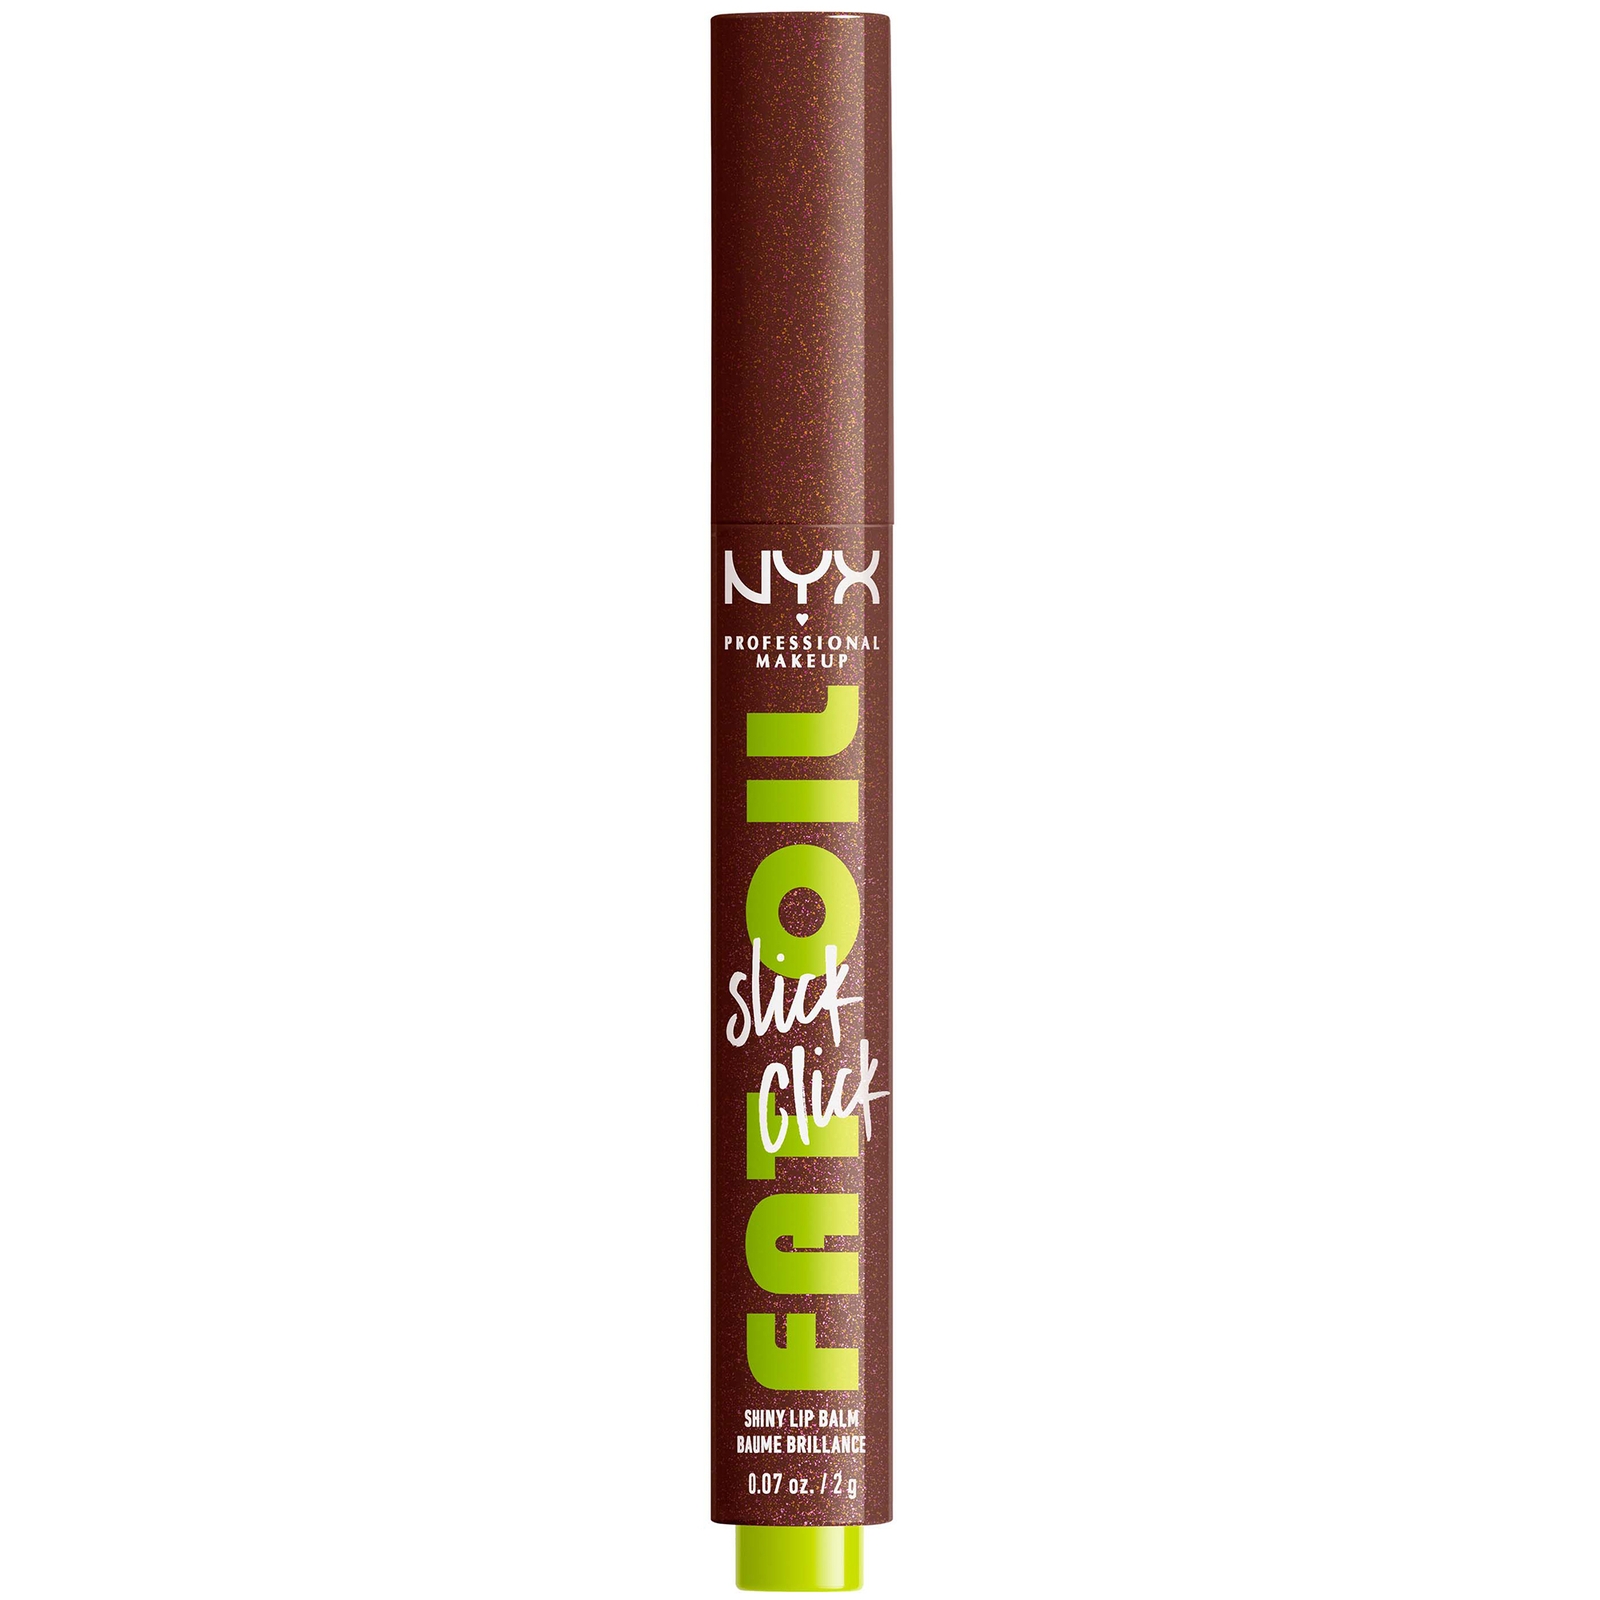 Nyx Professional Makeup Fat Oil Slick Click Lip Balm 2ml (various Shades) - Trending Topic